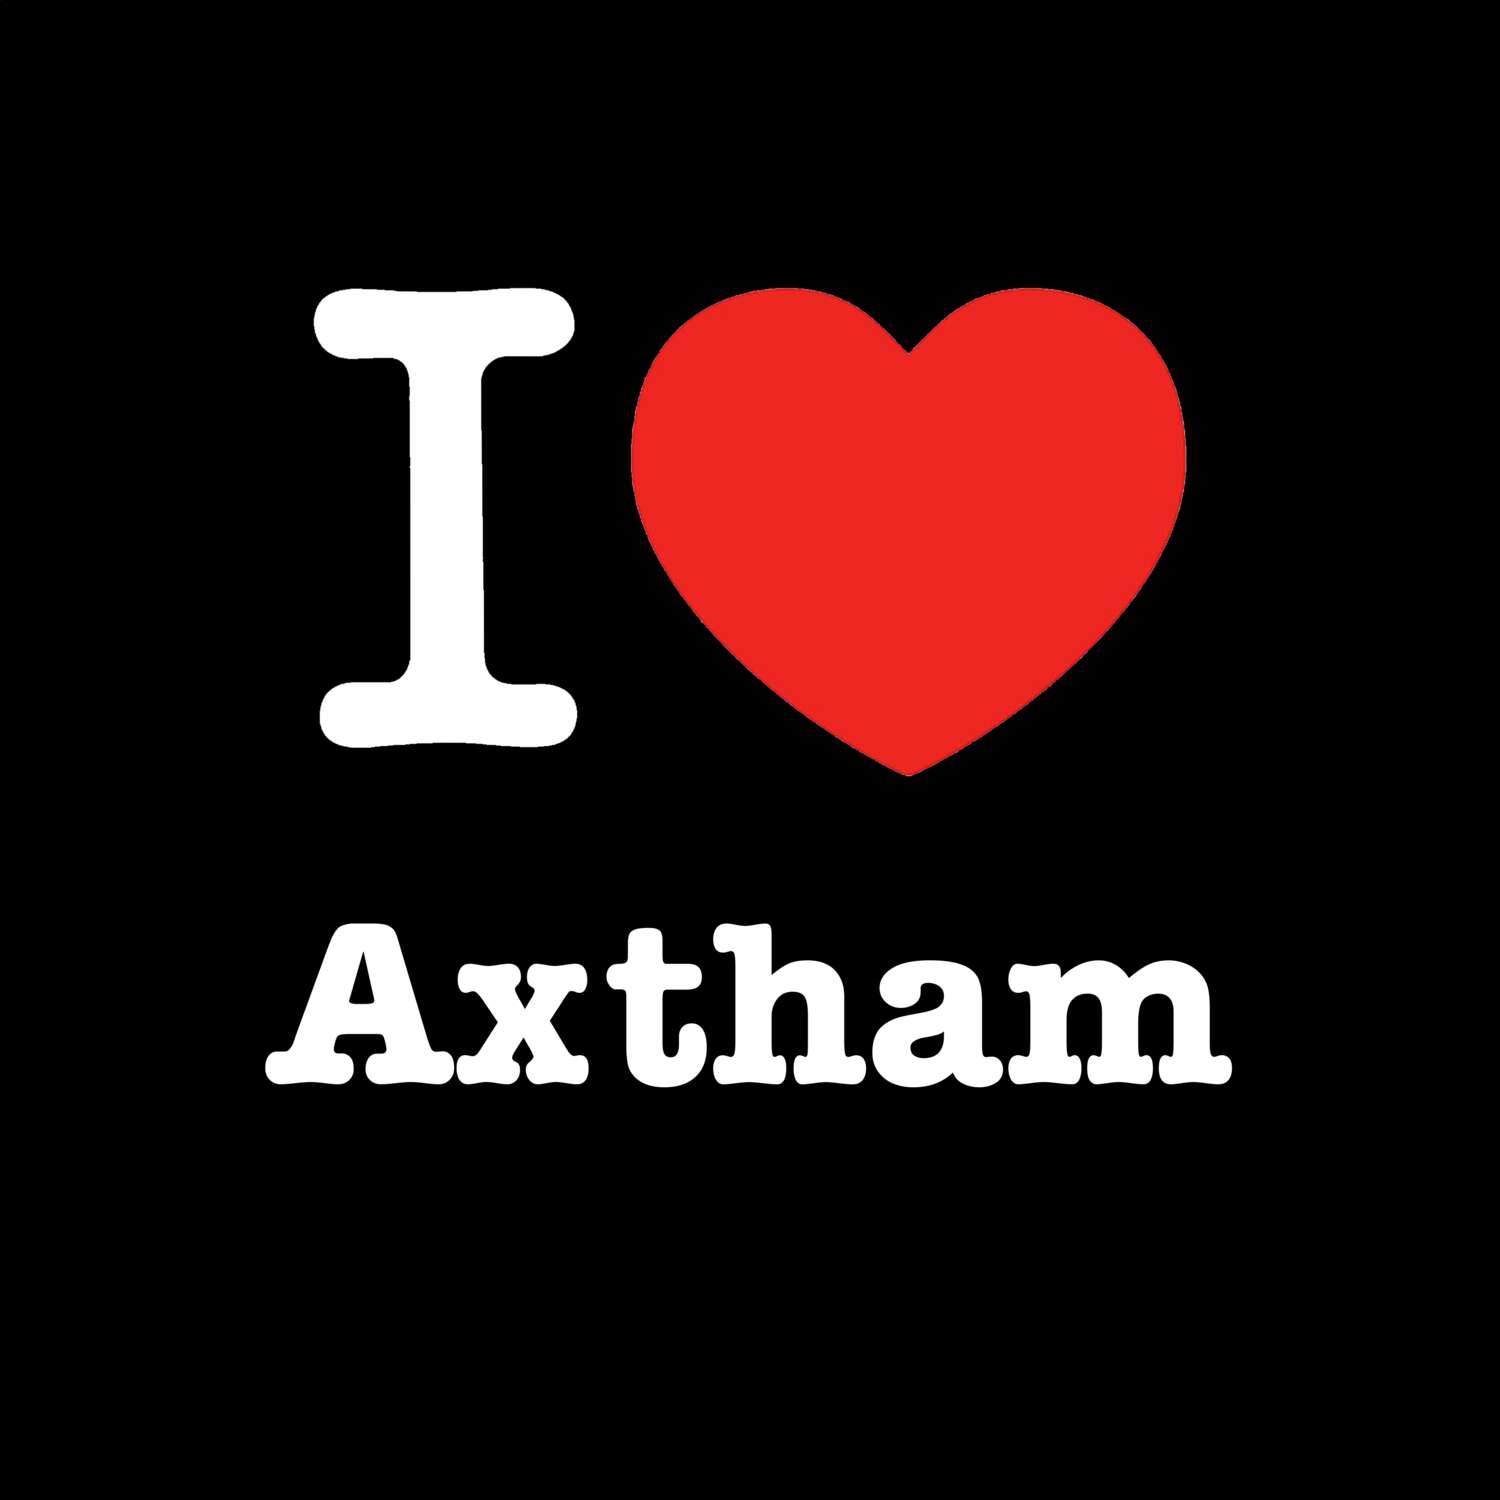 Axtham T-Shirt »I love«